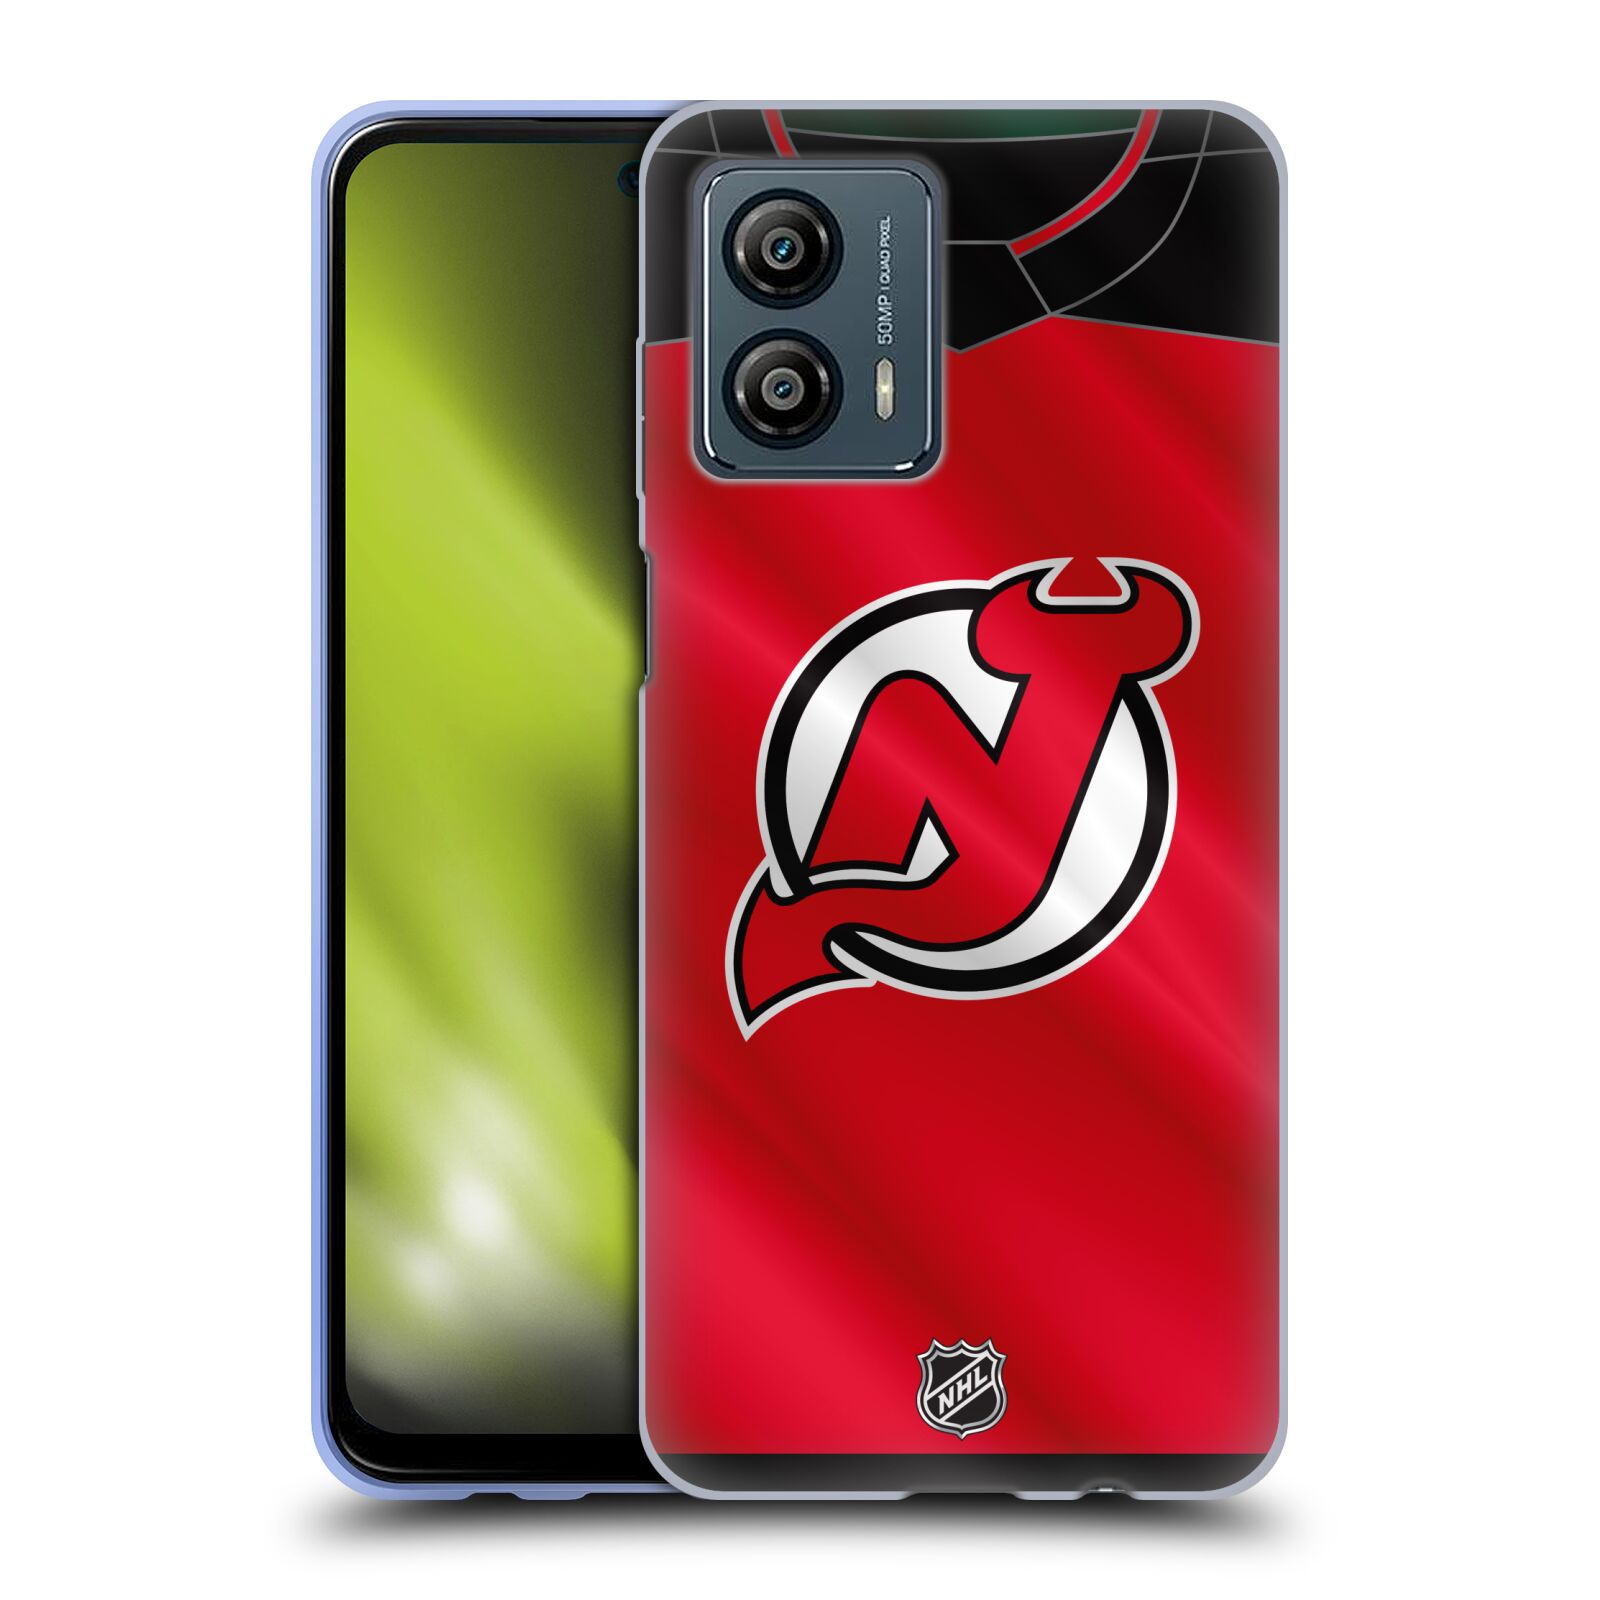 Silikonové pouzdro na mobil Motorola Moto G53 5G - NHL - Dres New Jersey Devils (Silikonový kryt, obal, pouzdro na mobilní telefon Motorola Moto G53 5G s licencovaným motivem NHL - Dres New Jersey Devils)